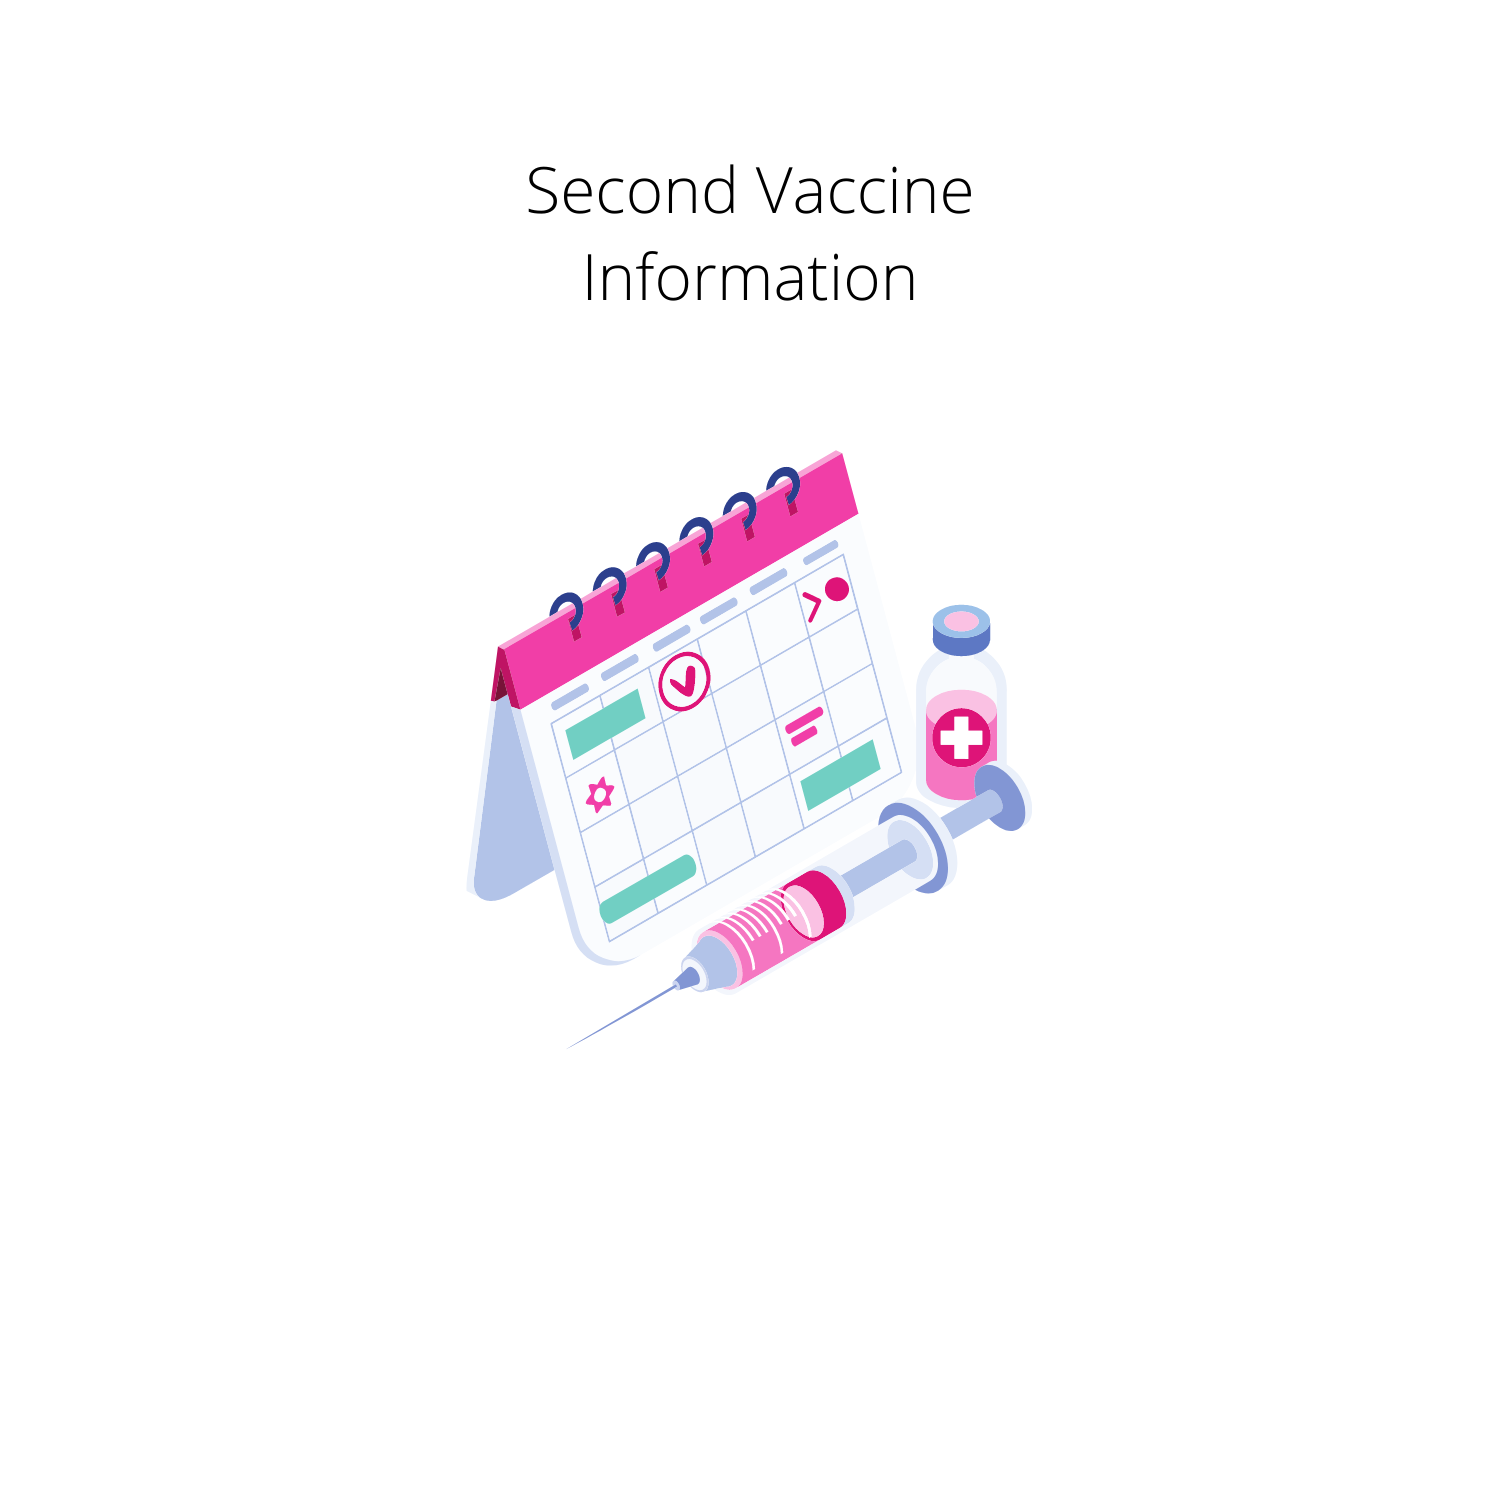 Second Vaccine Information